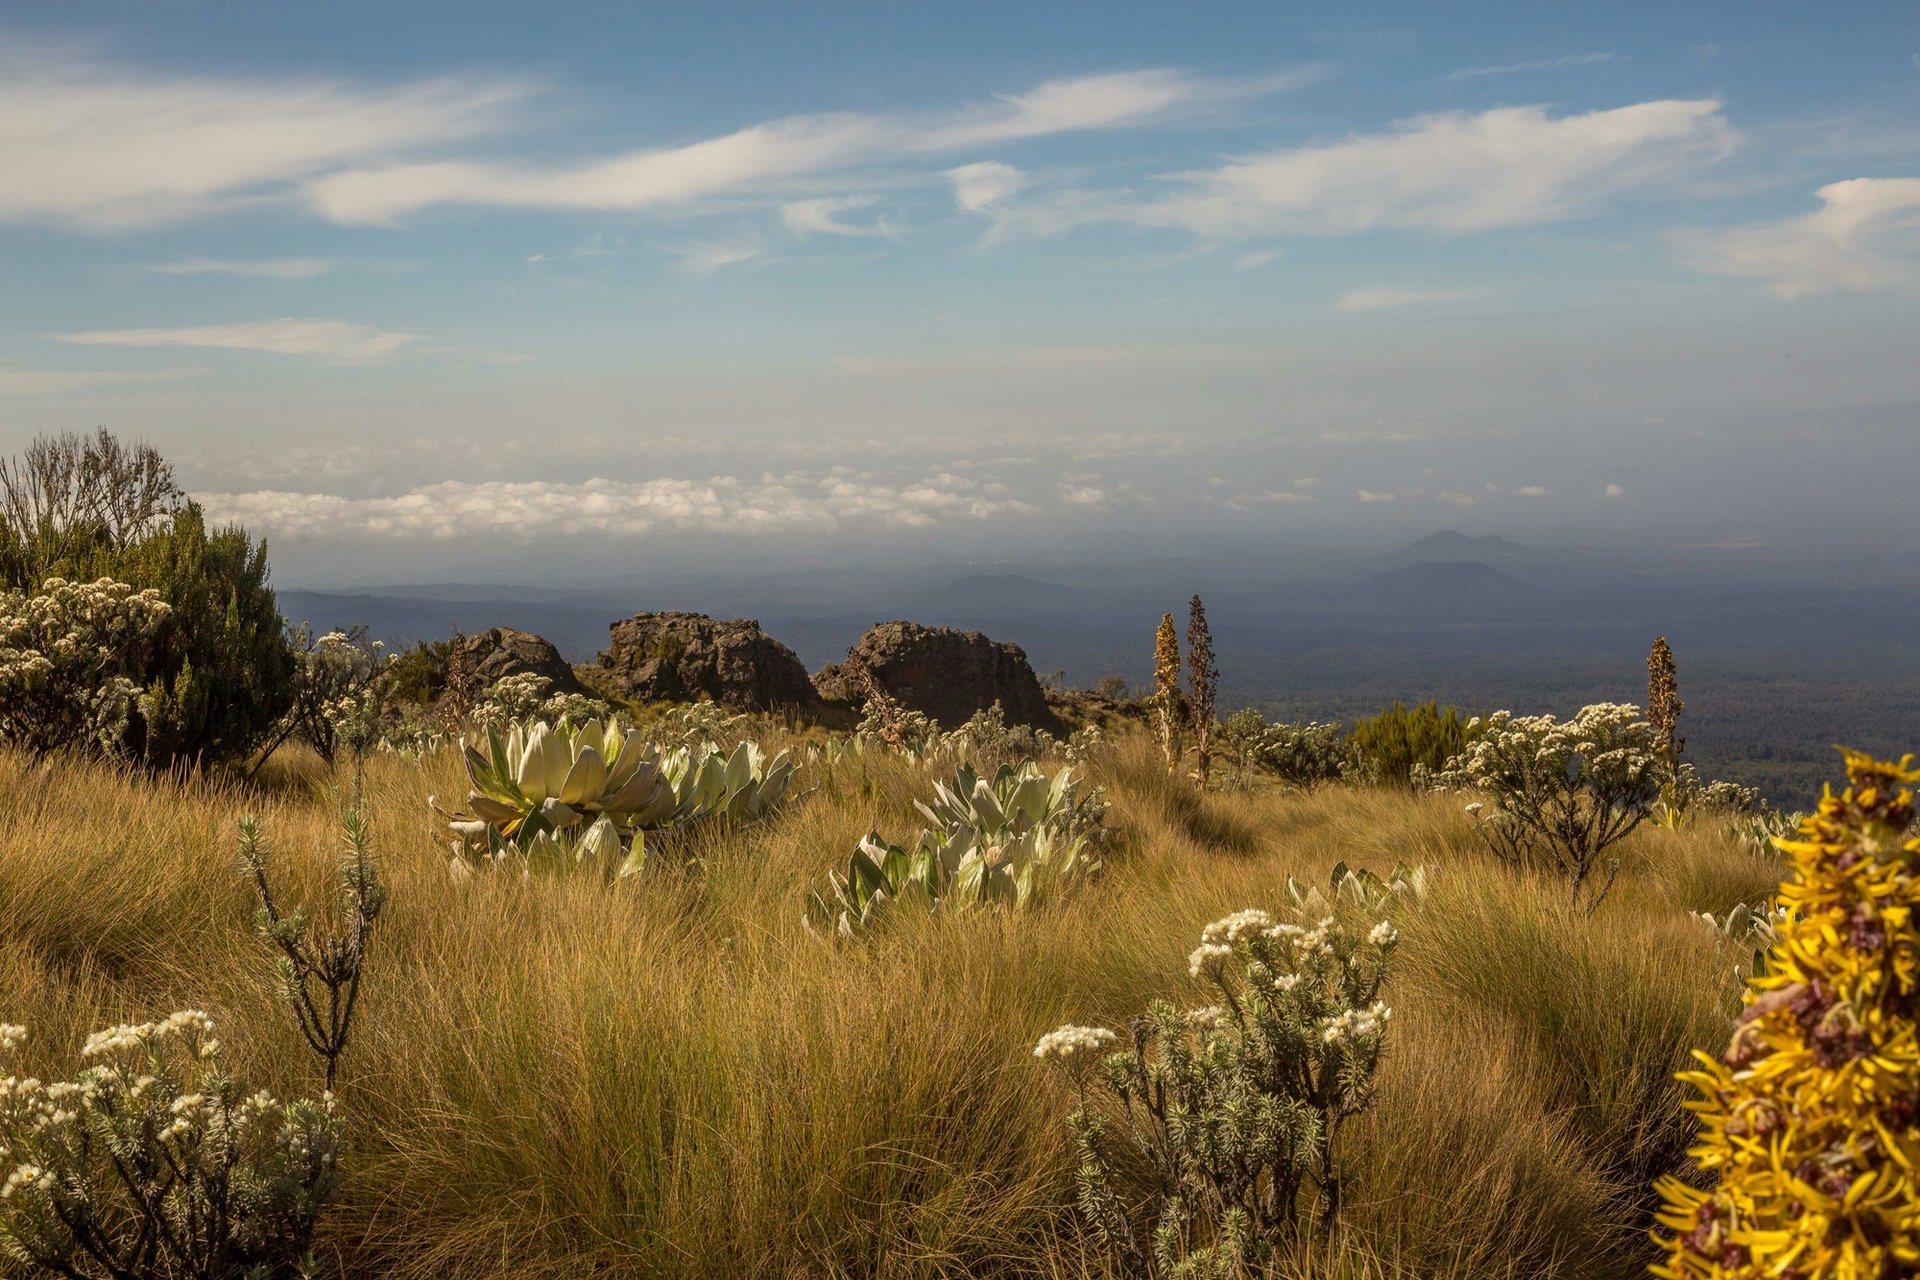 Le Mont Kenya, Kenya